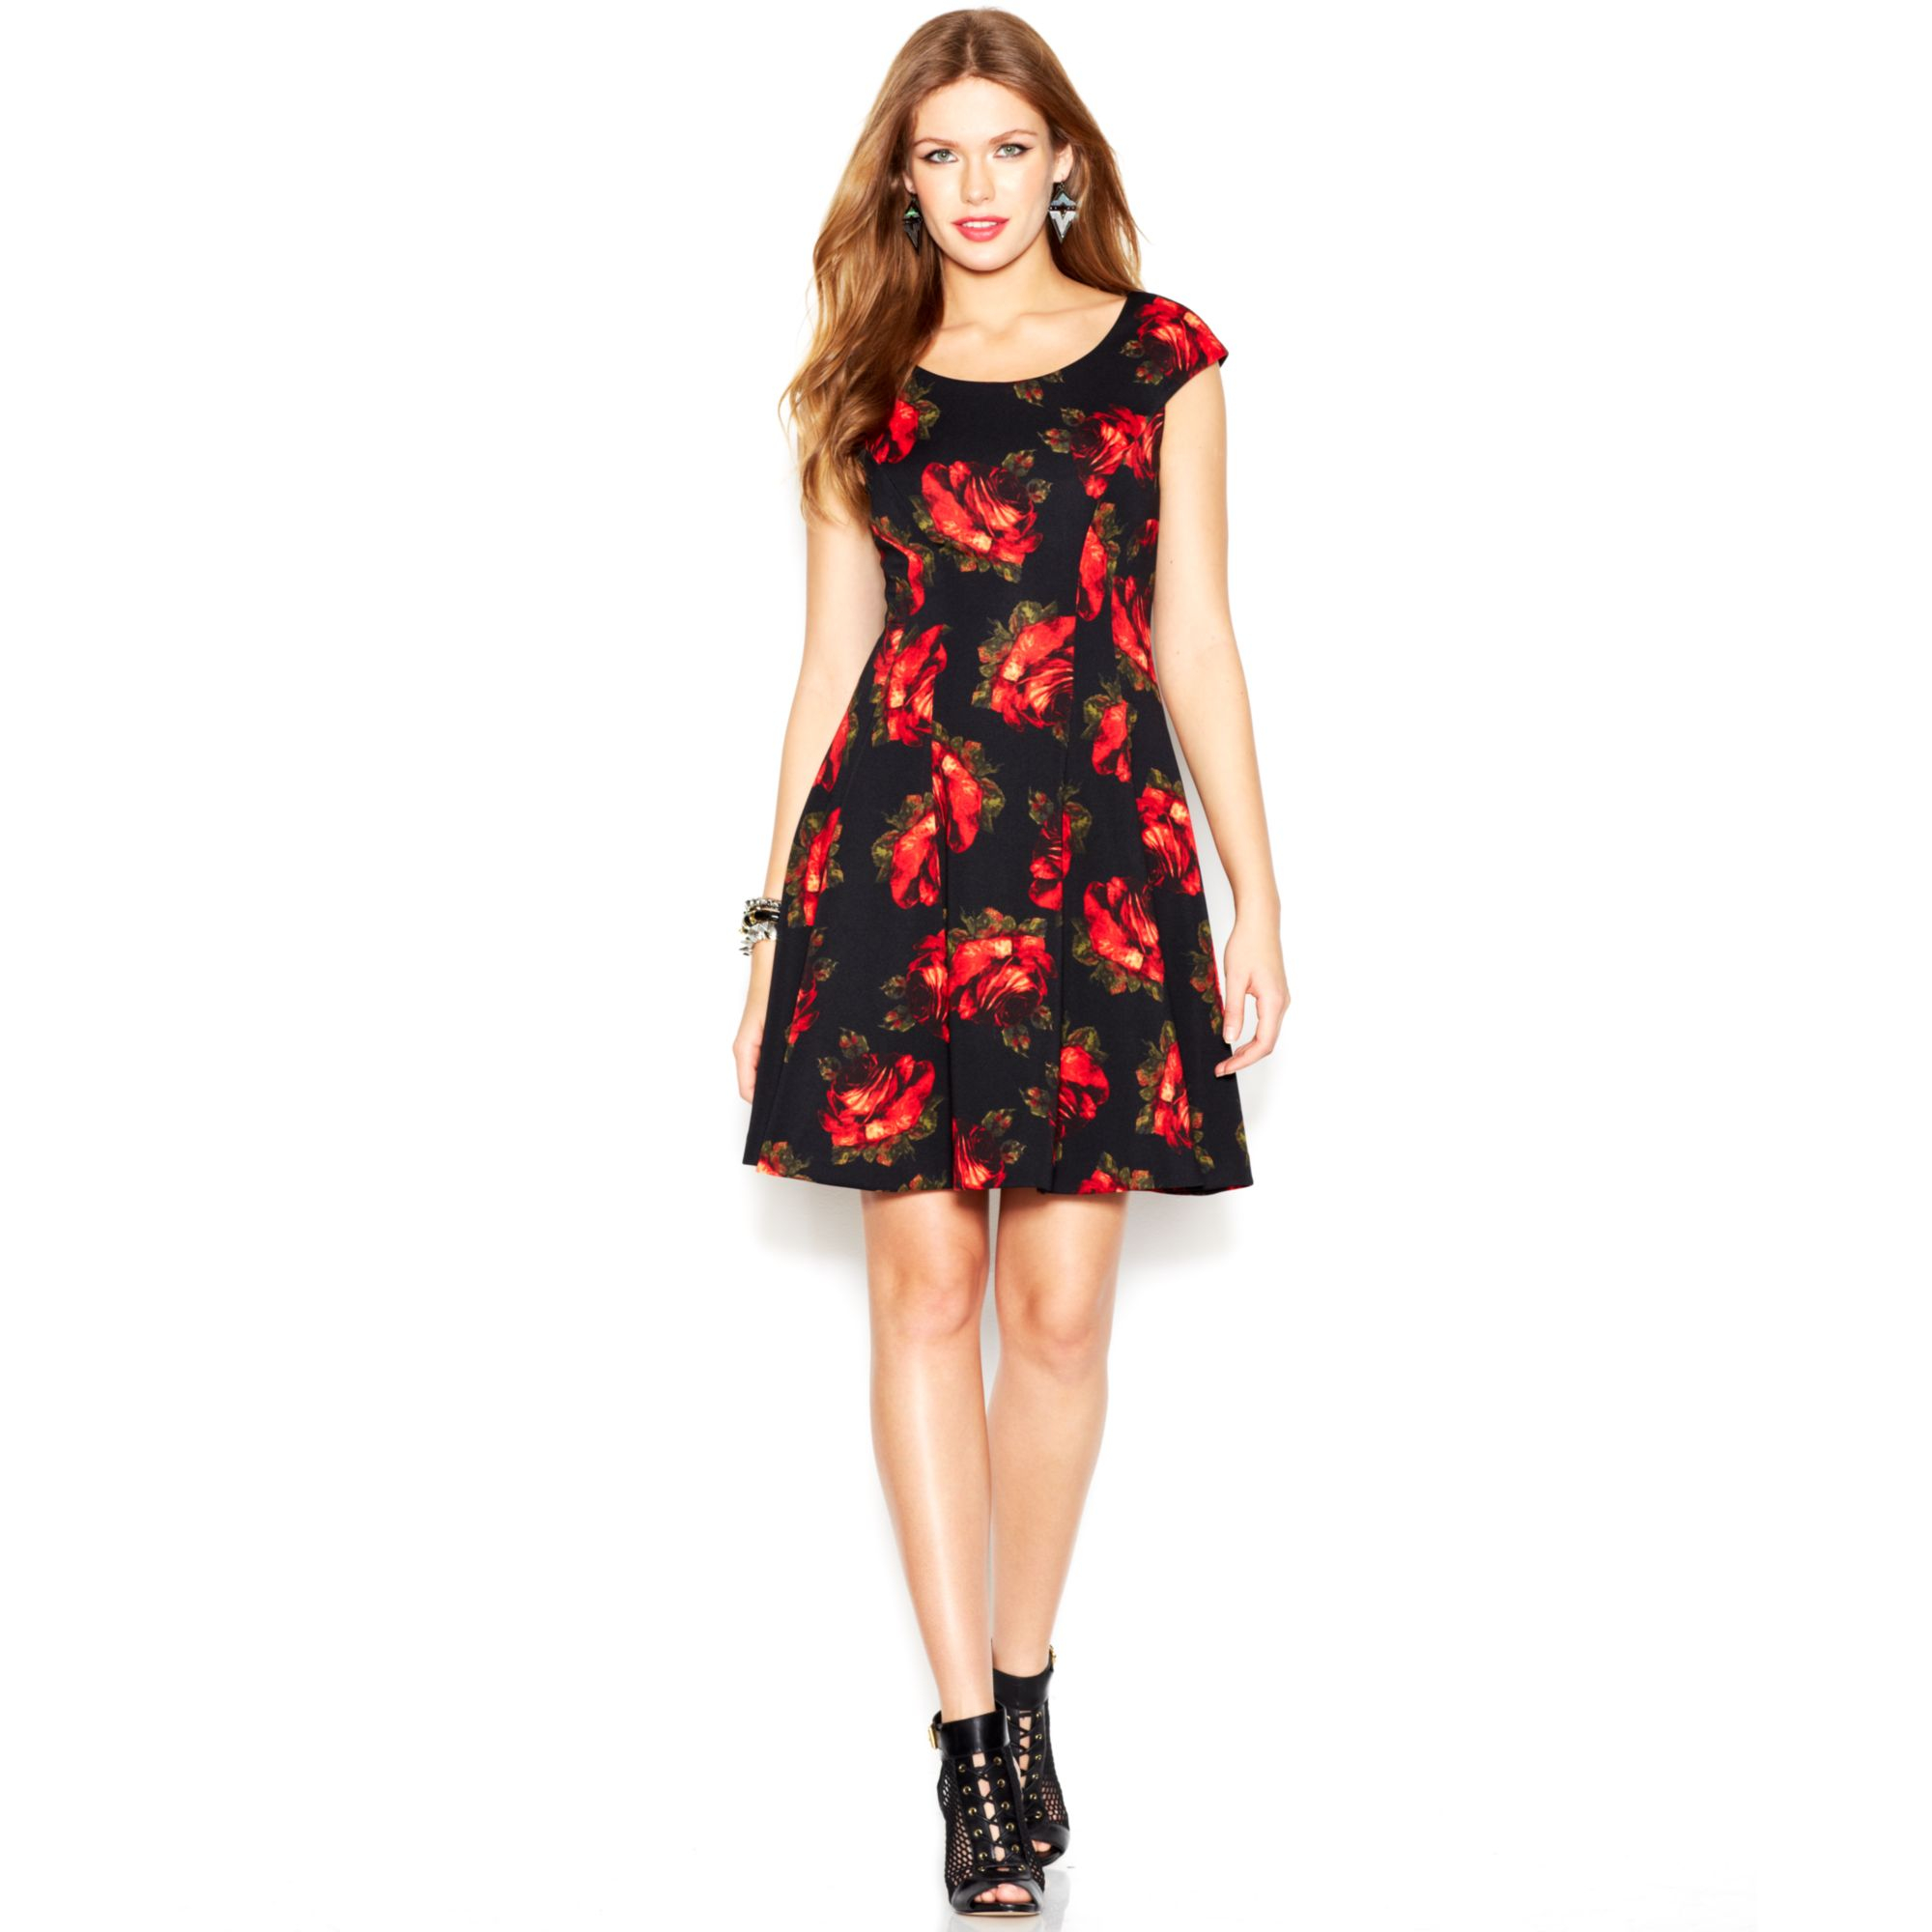 Betsey johnson Cap-Sleeve Rose-Print Dress in Red (Black Multi) | Lyst